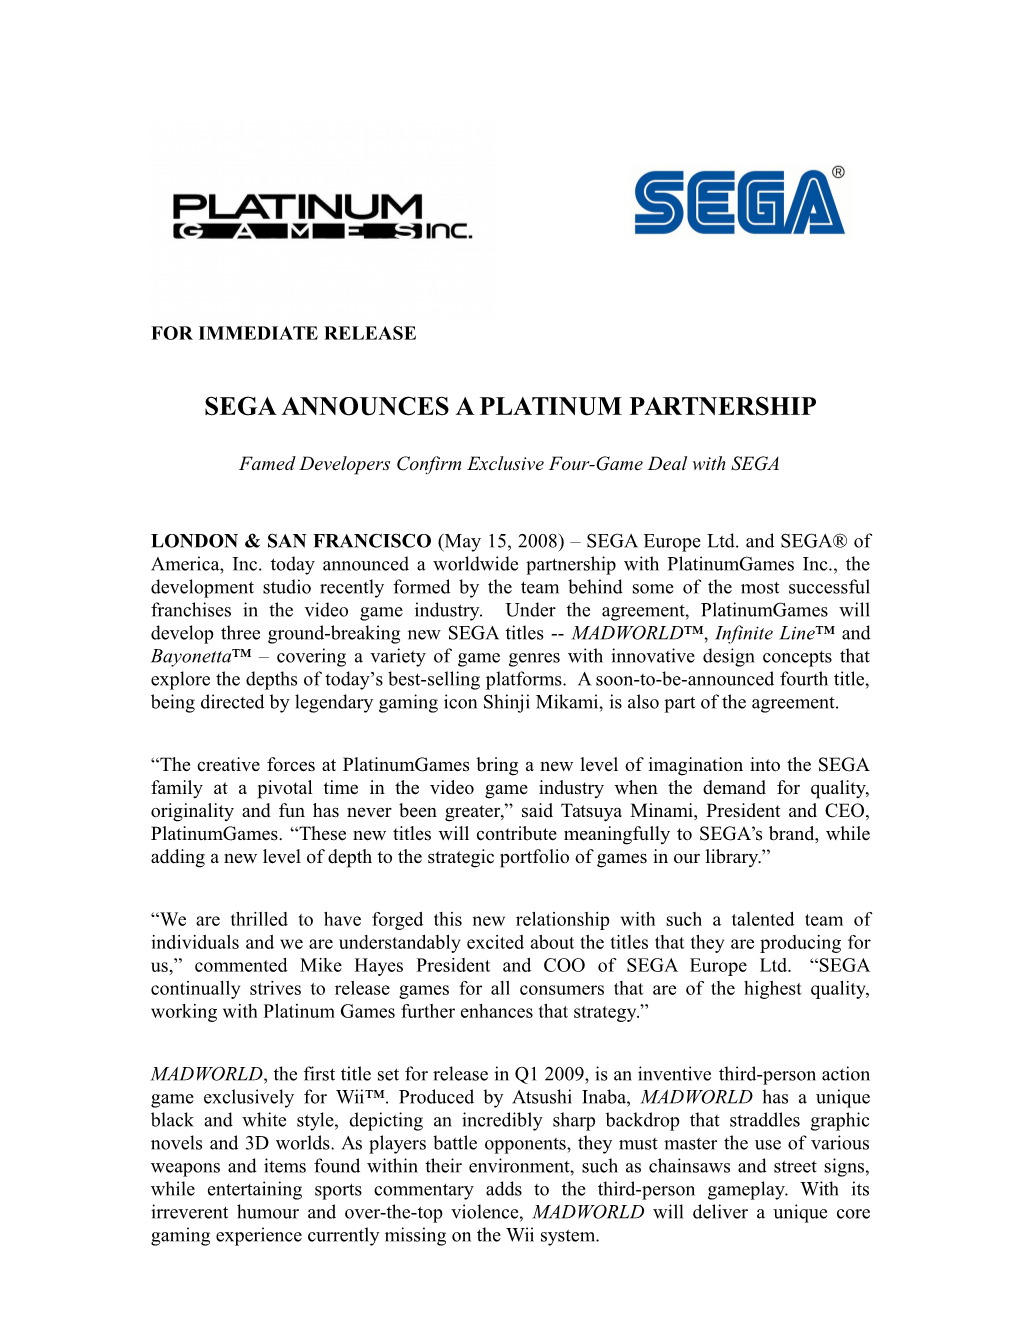 Sega Announces a Platinum Partnership